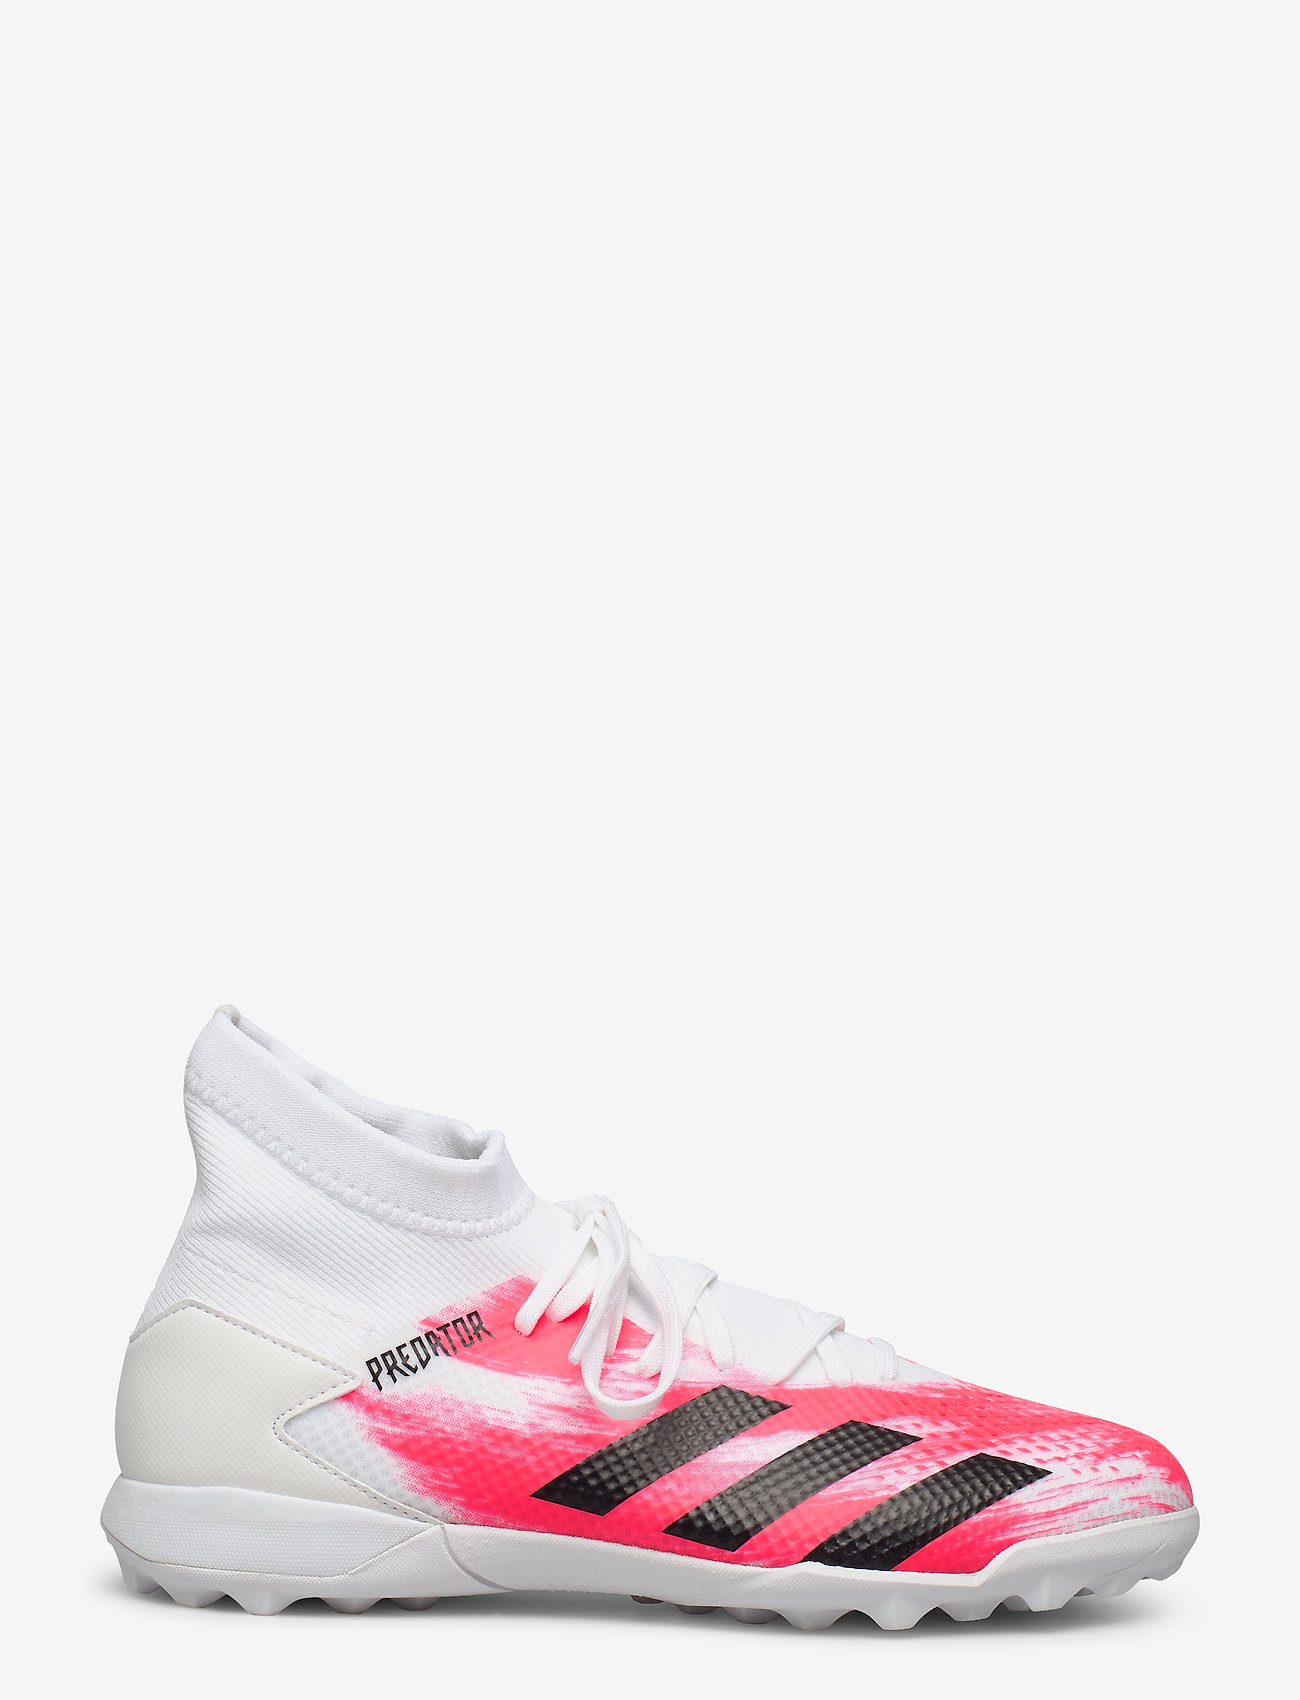 adidas predator pink and white